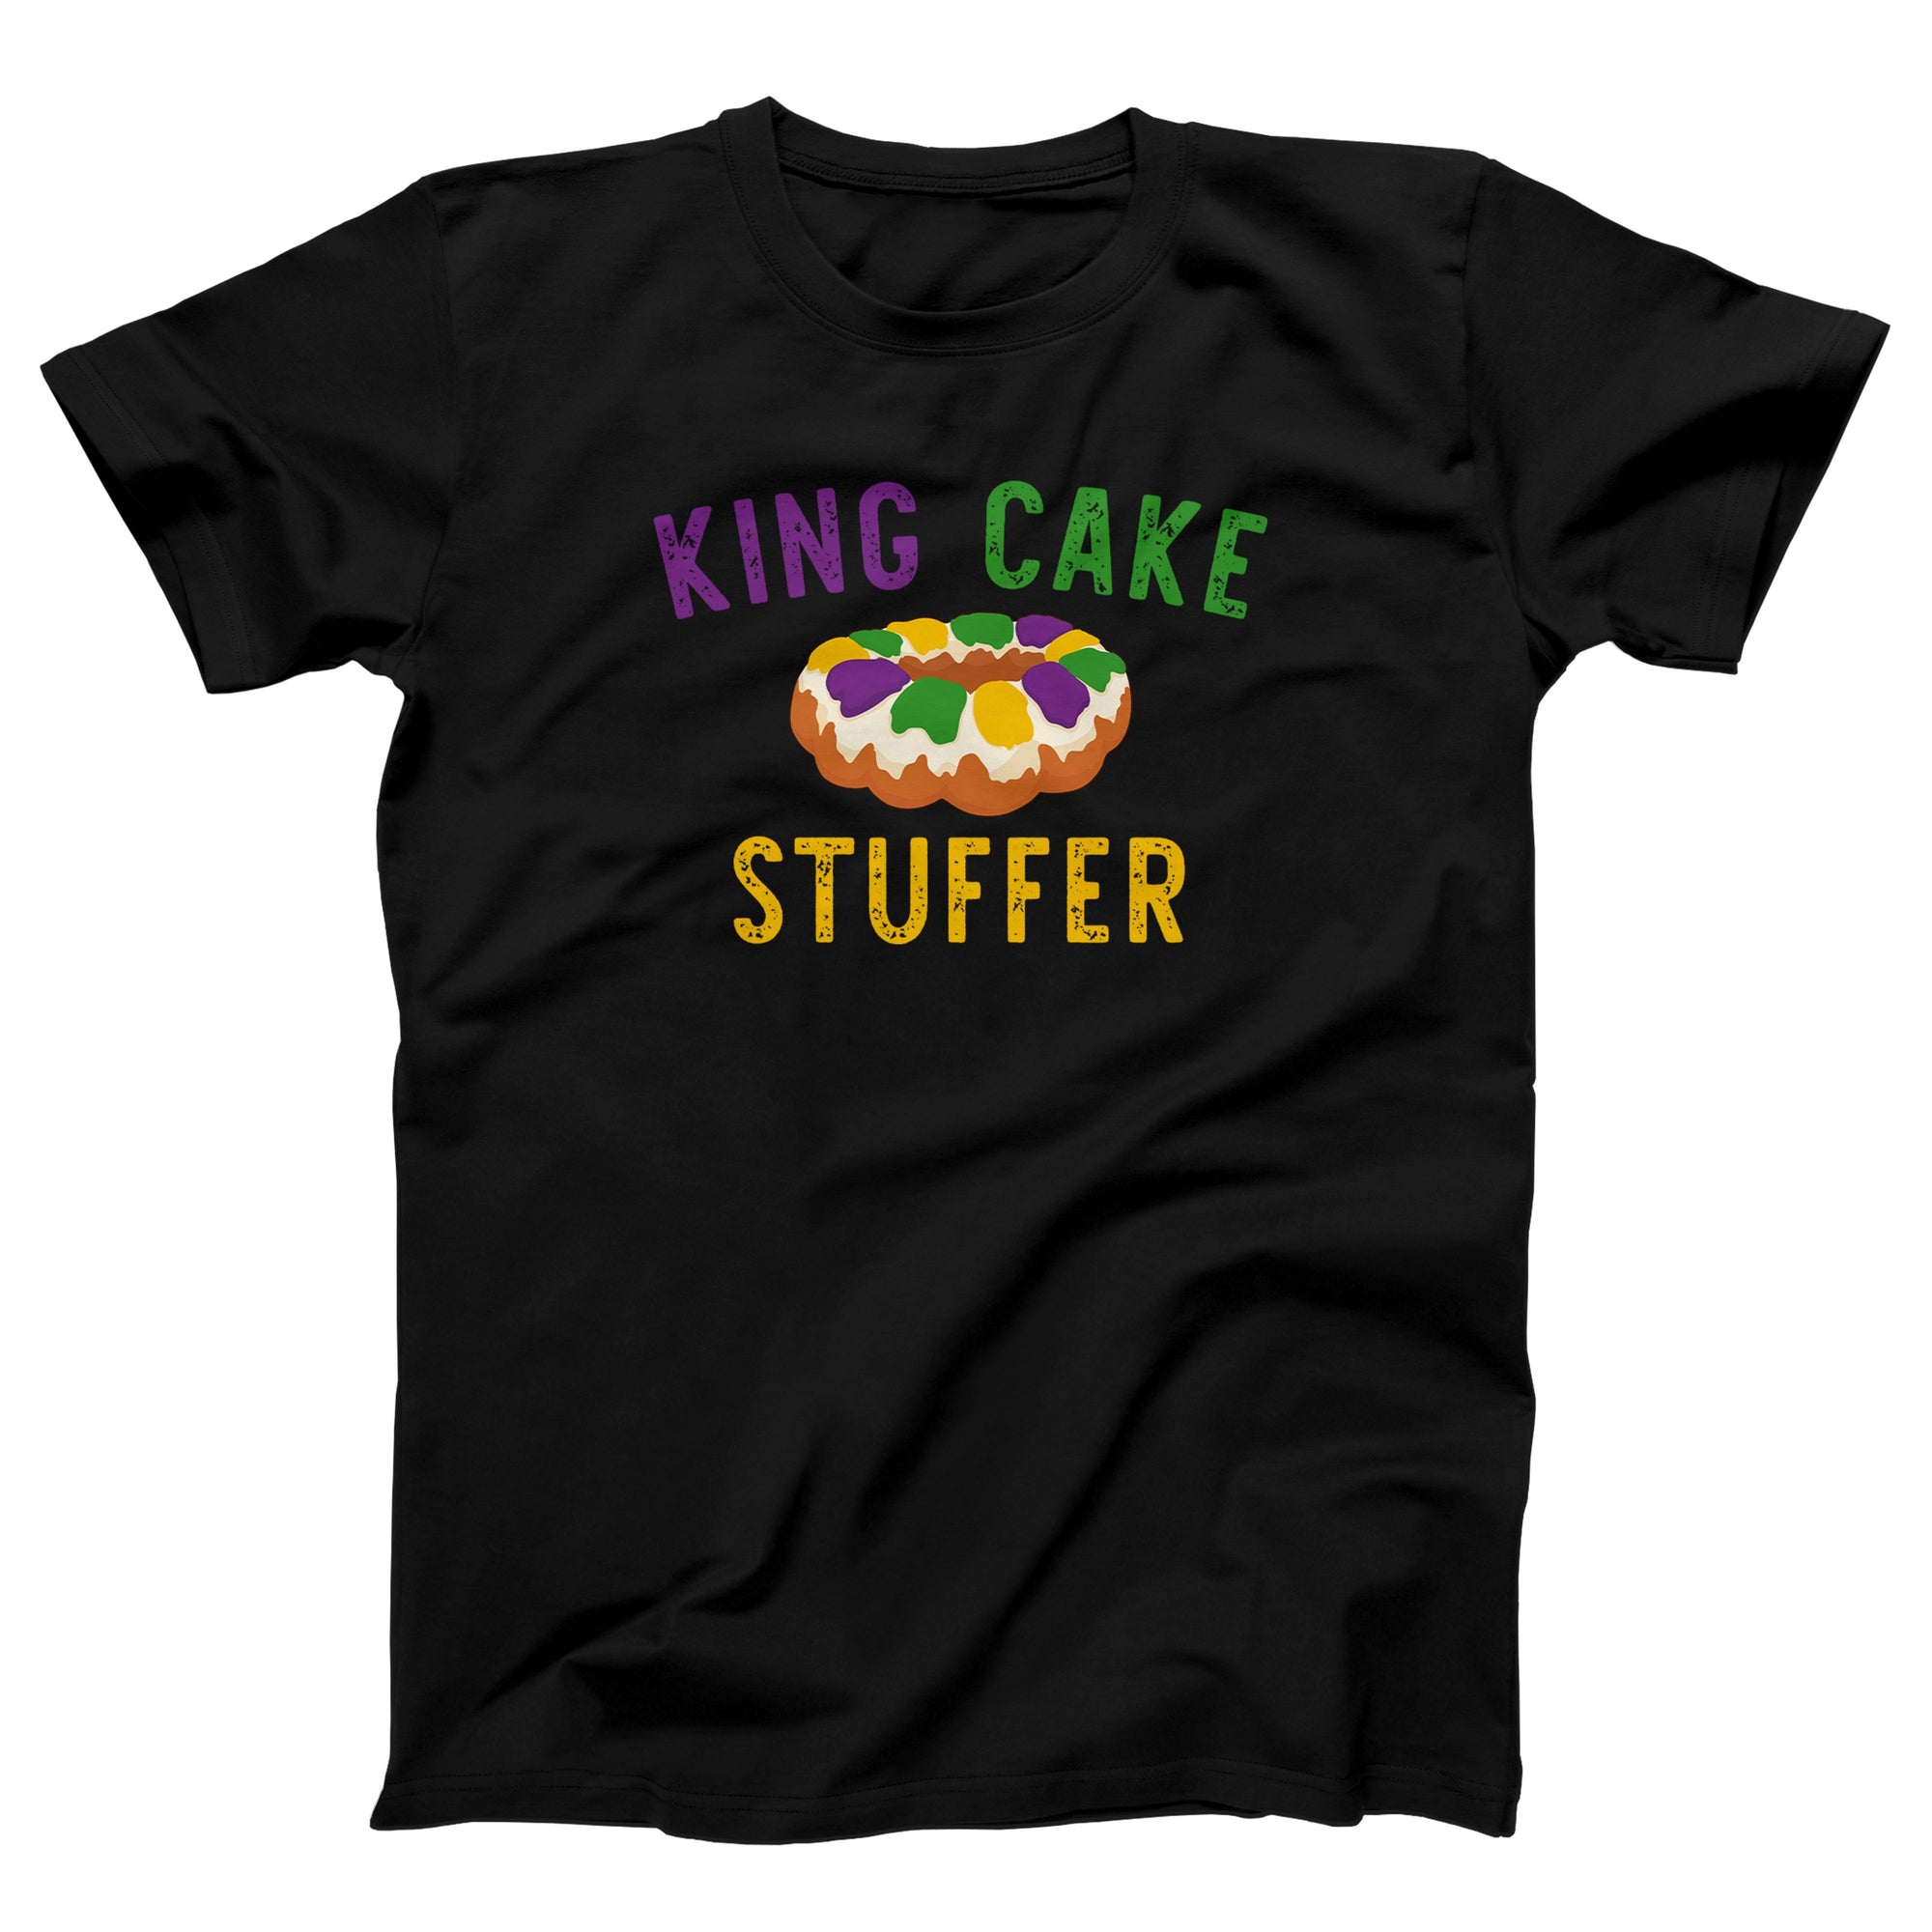 King Cake Stuffer Adult Unisex T-Shirt - anishphilip